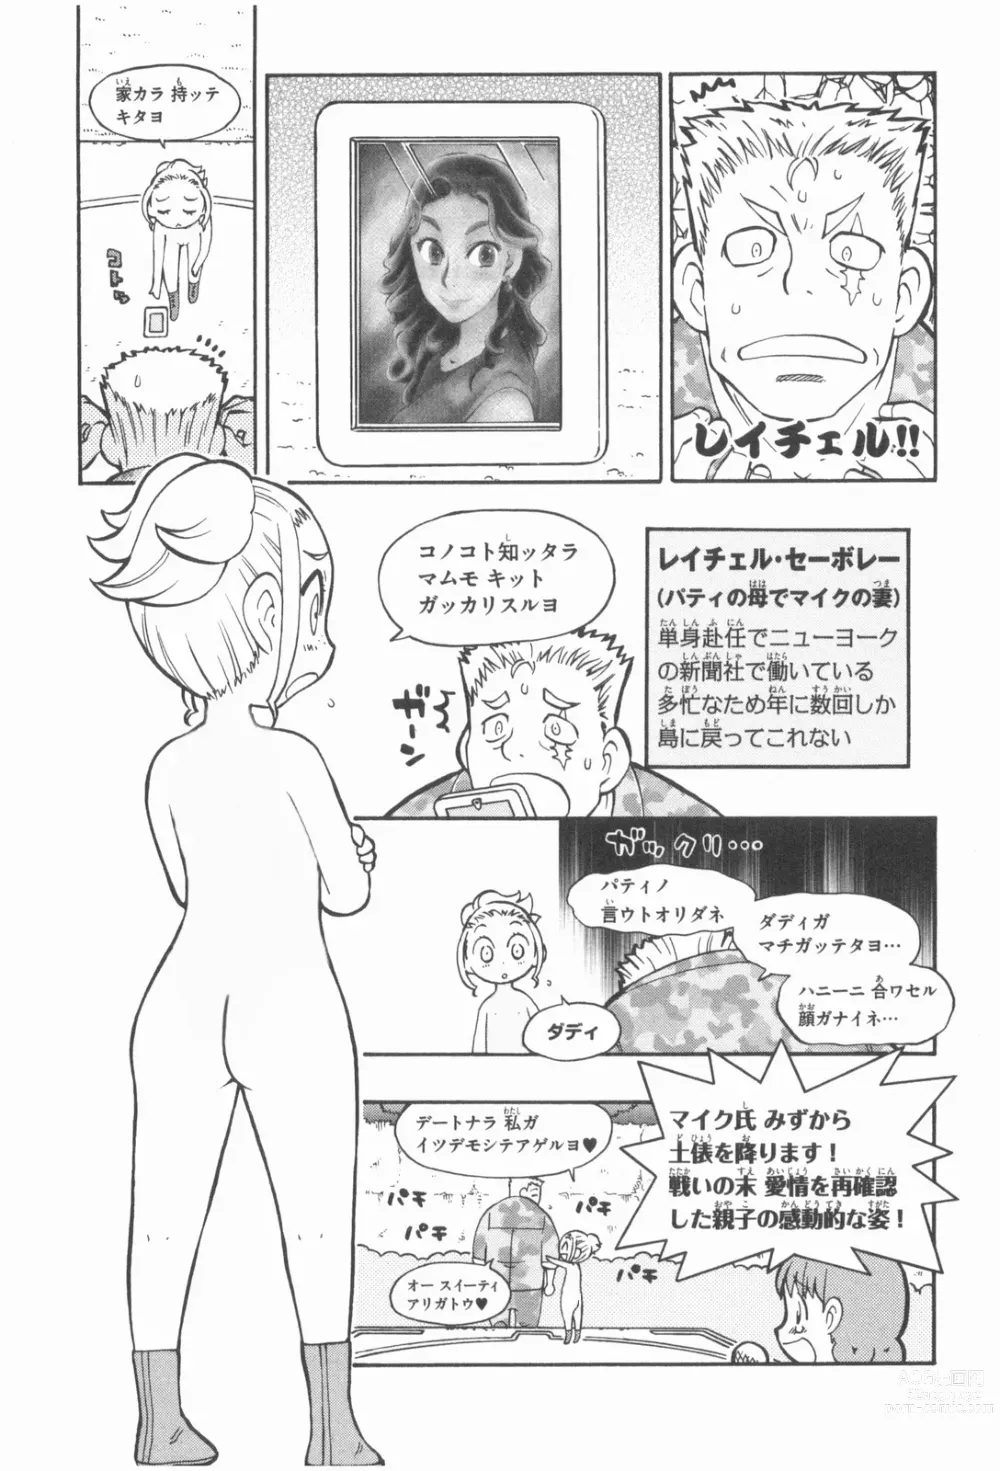 Page 3 of doujinshi Terao the Next Generation Machine